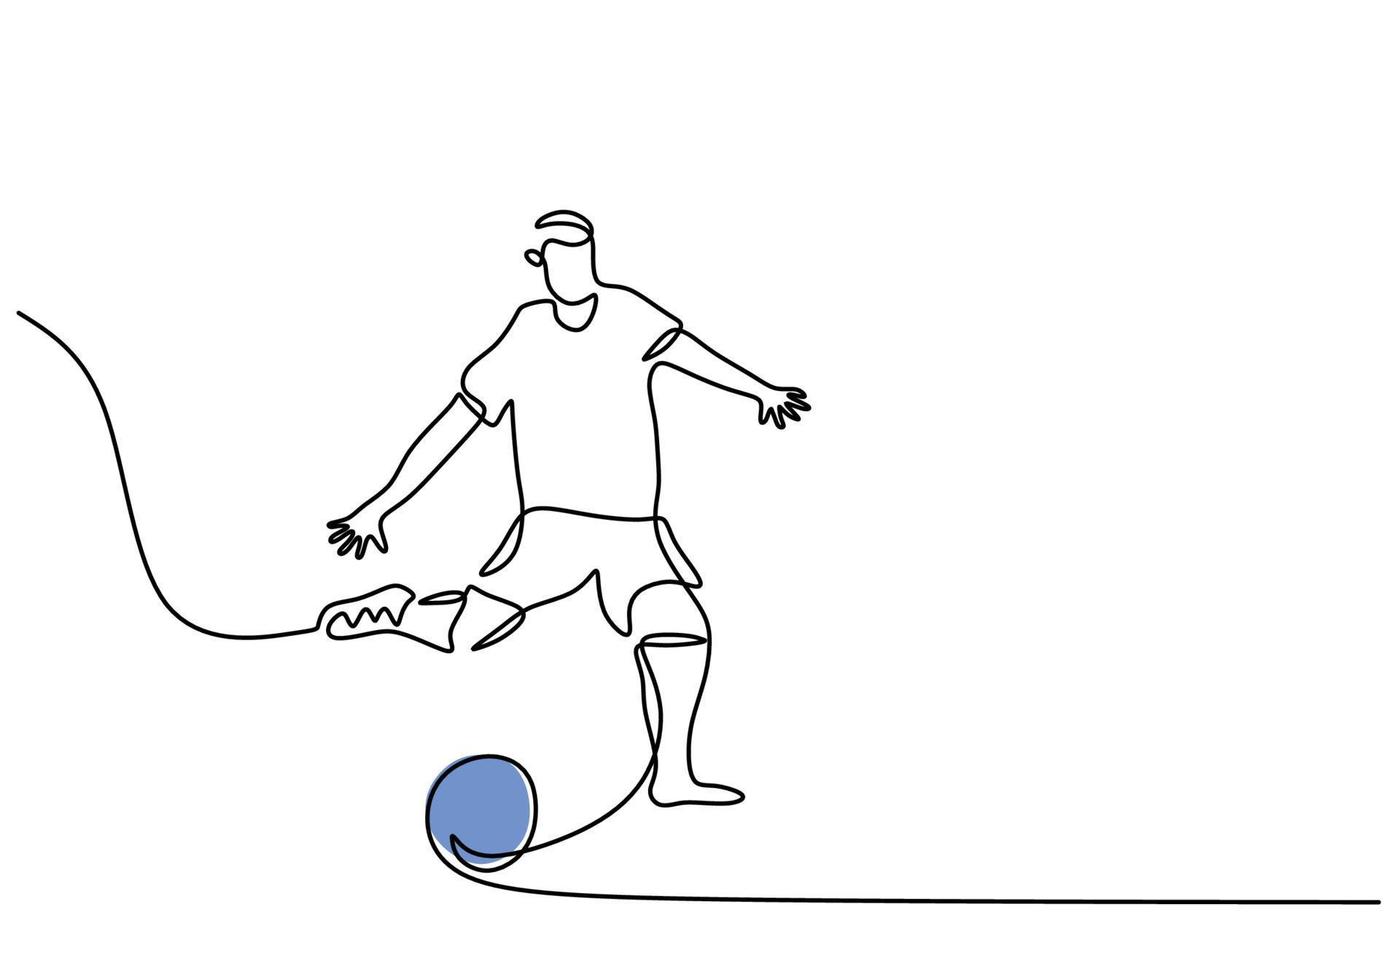 una sola línea continua de hombre patea una pelota sobre fondo blanco. vector